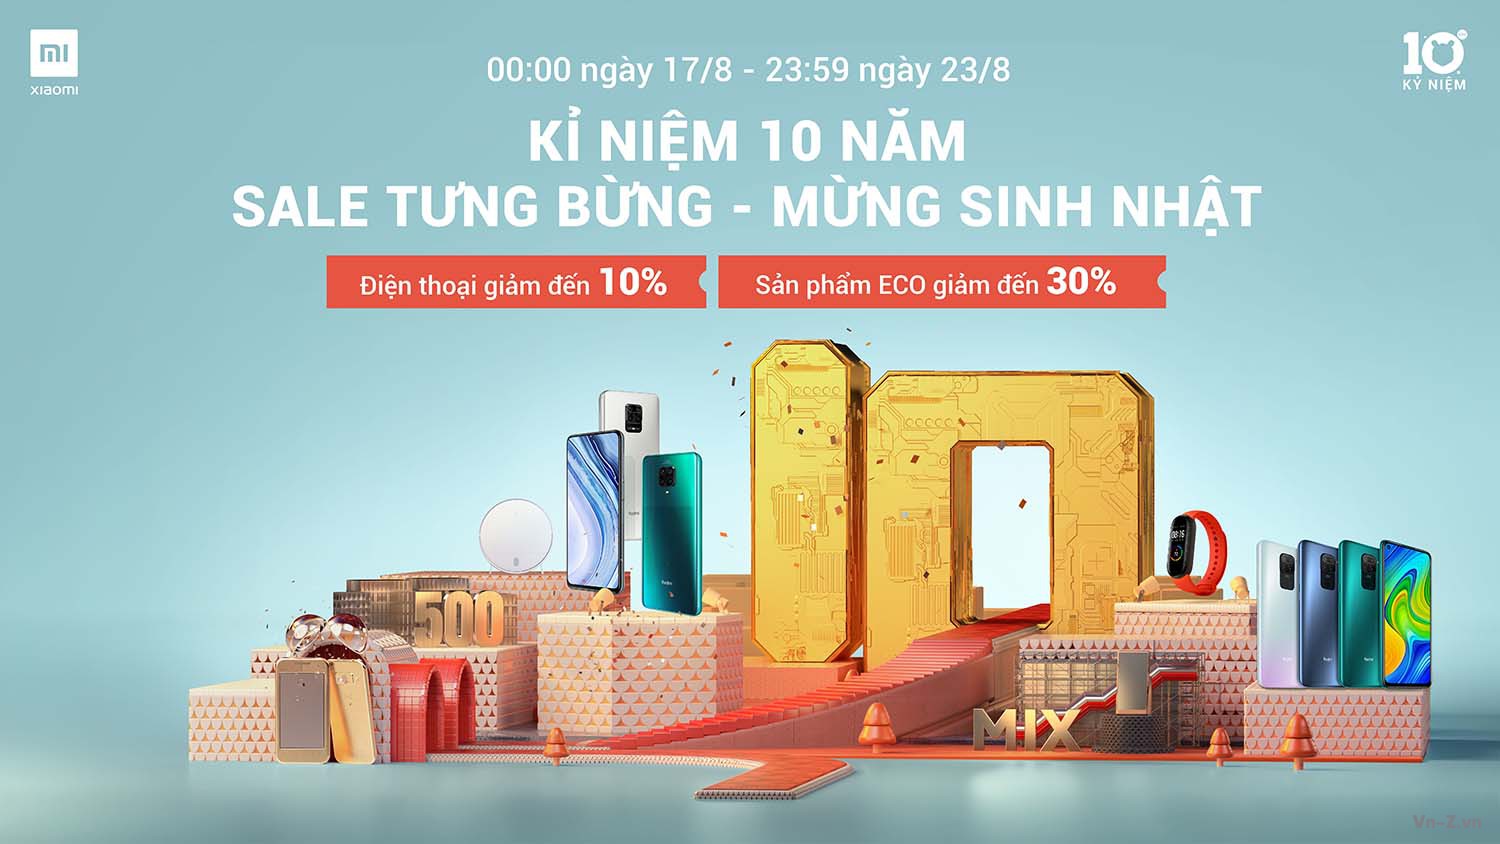 Chuong-trinh-k-niem-10-nam-Xiaomi.jpg